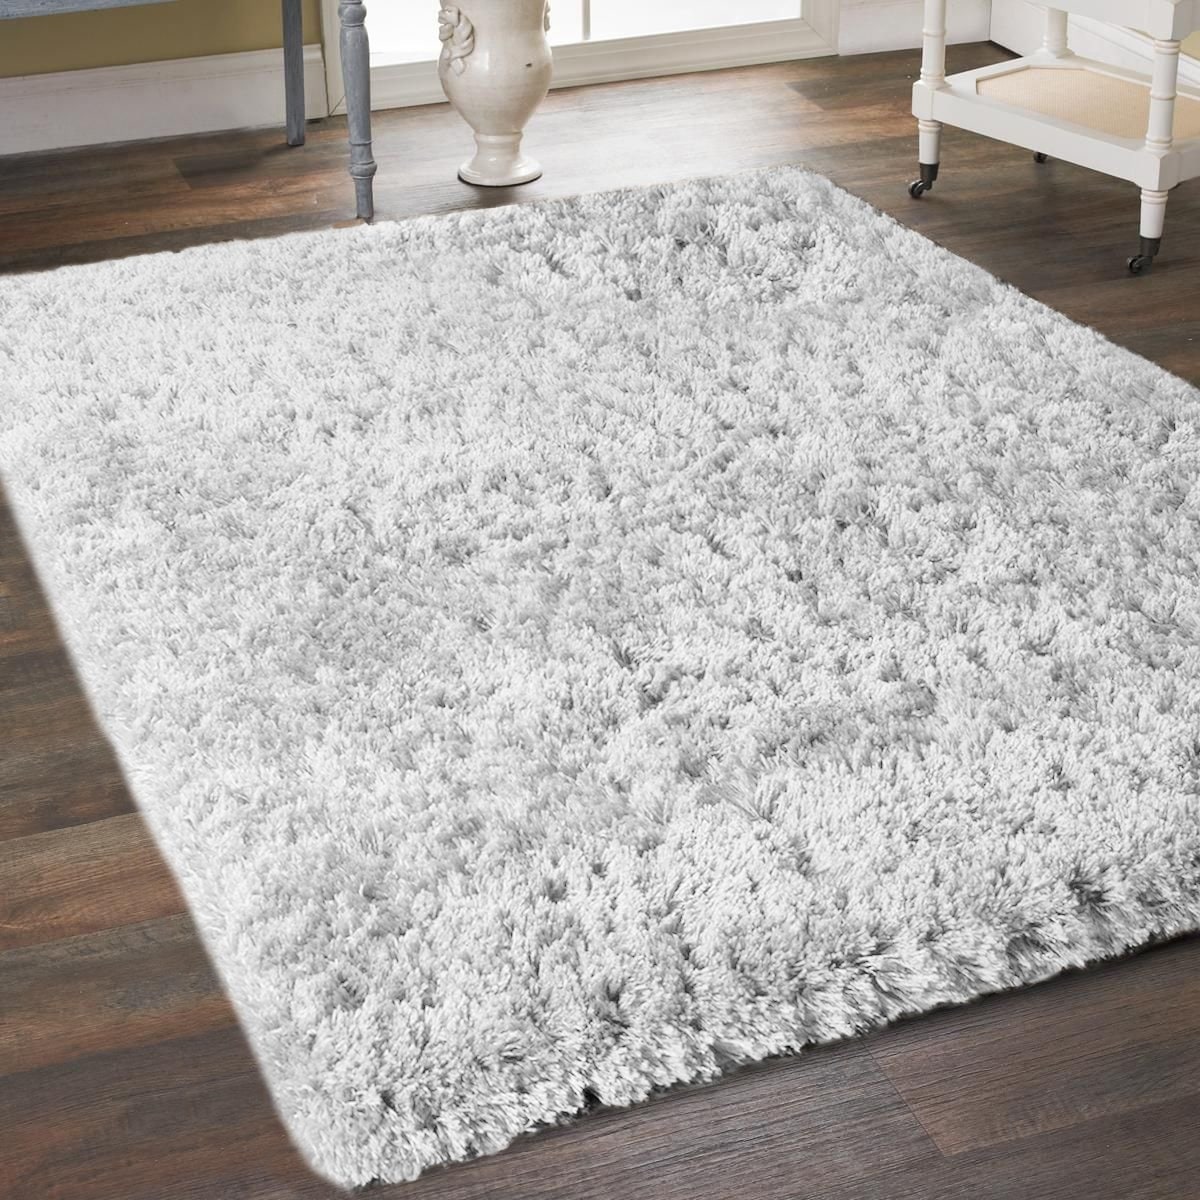 Details about   Solid Pure White Shag Carpet Area Rug Indoor Mat Faux Fur 2 x 3 x 4 x 5 x 7 ft 